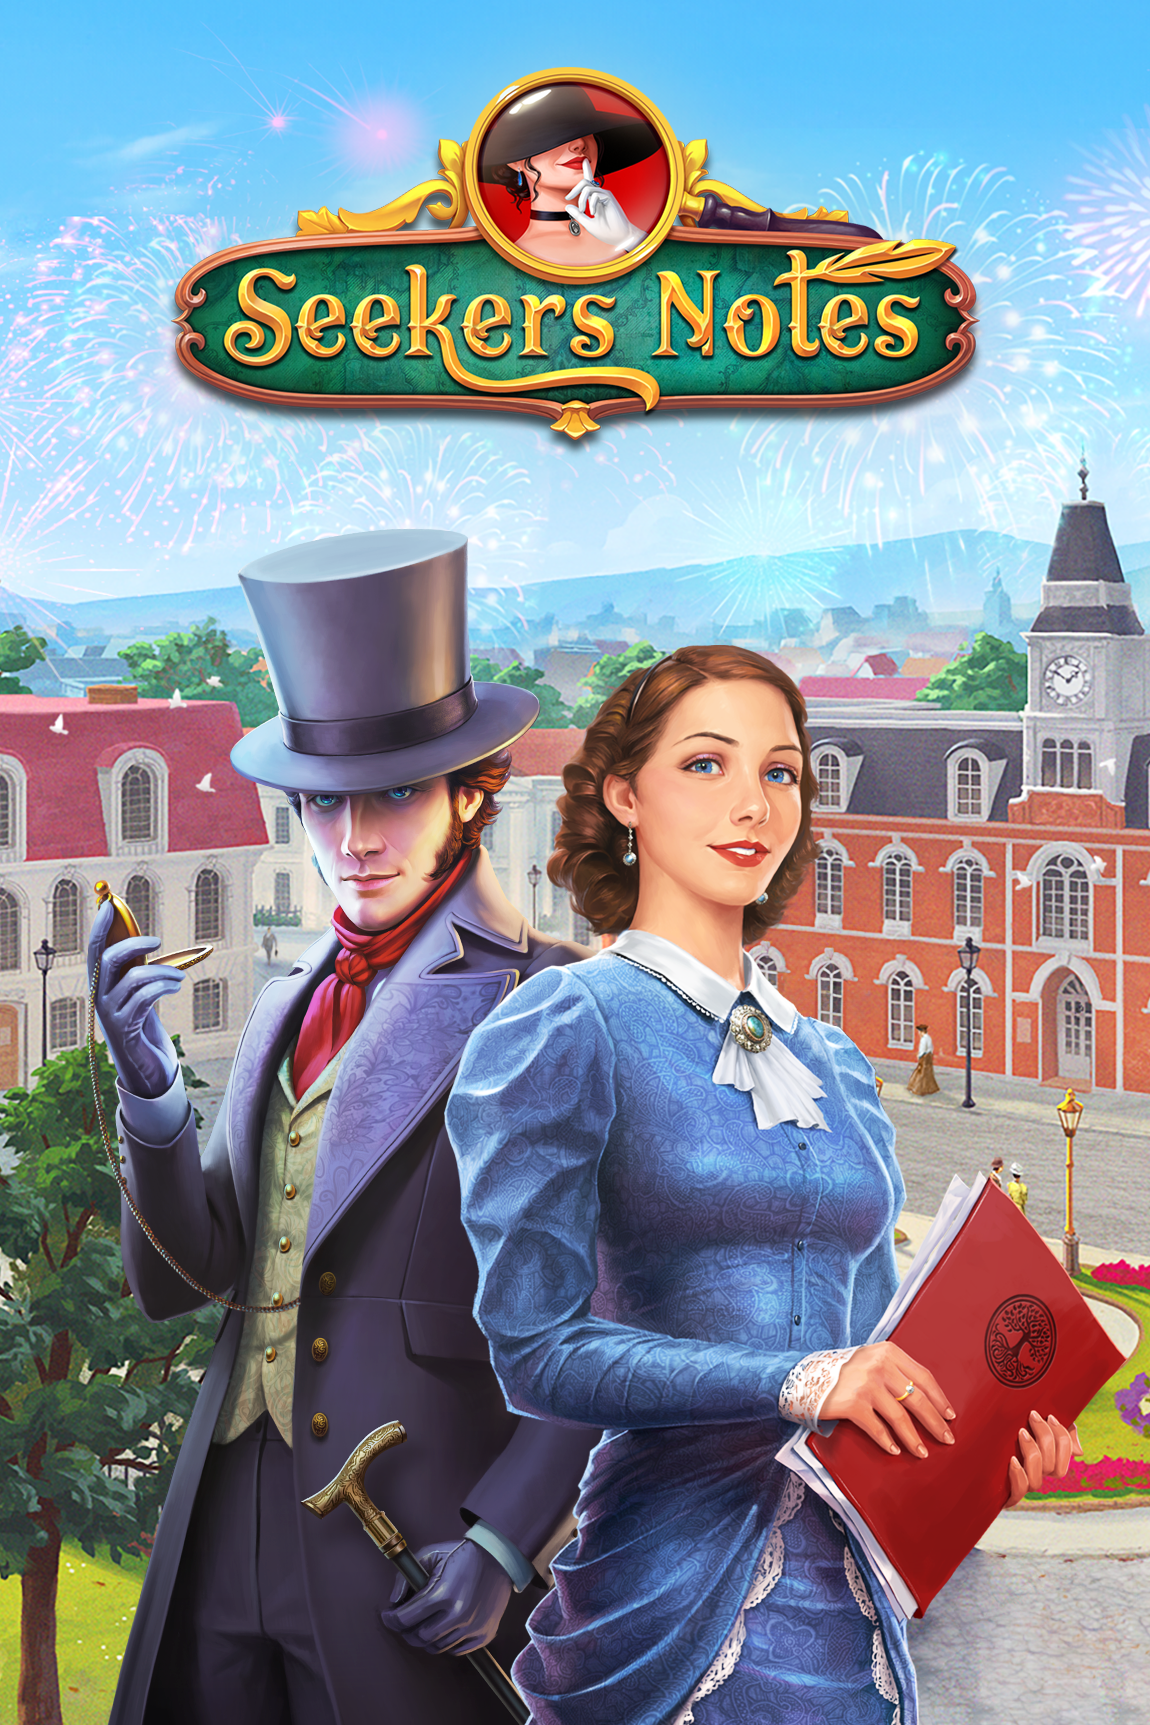 Seekers Notes®: Hidden Objects